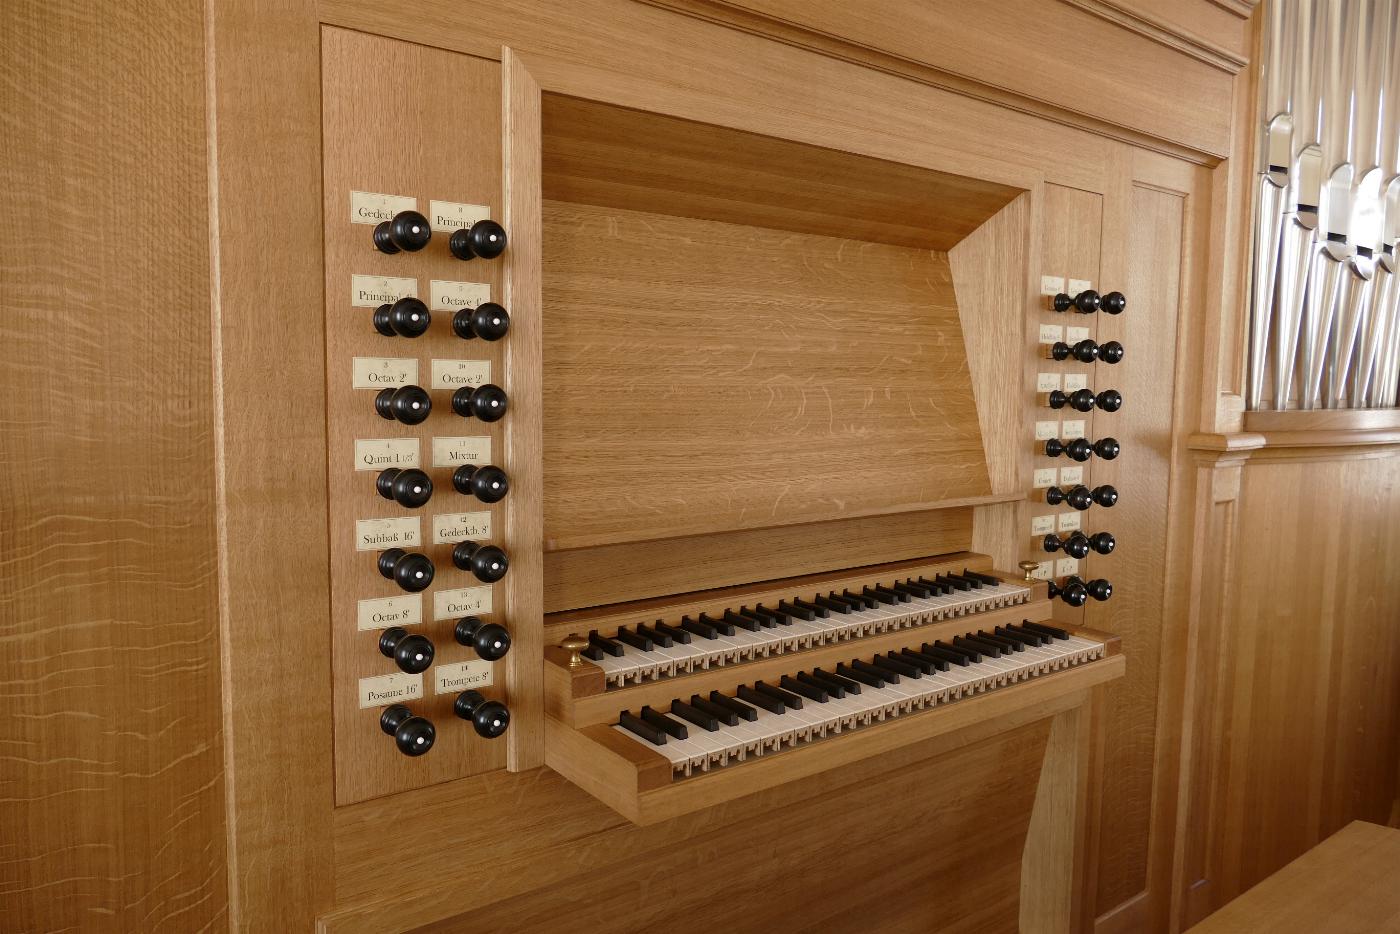 New organ, Murg-Haenner, catholic church of St. Leodegar and Marzellus, console